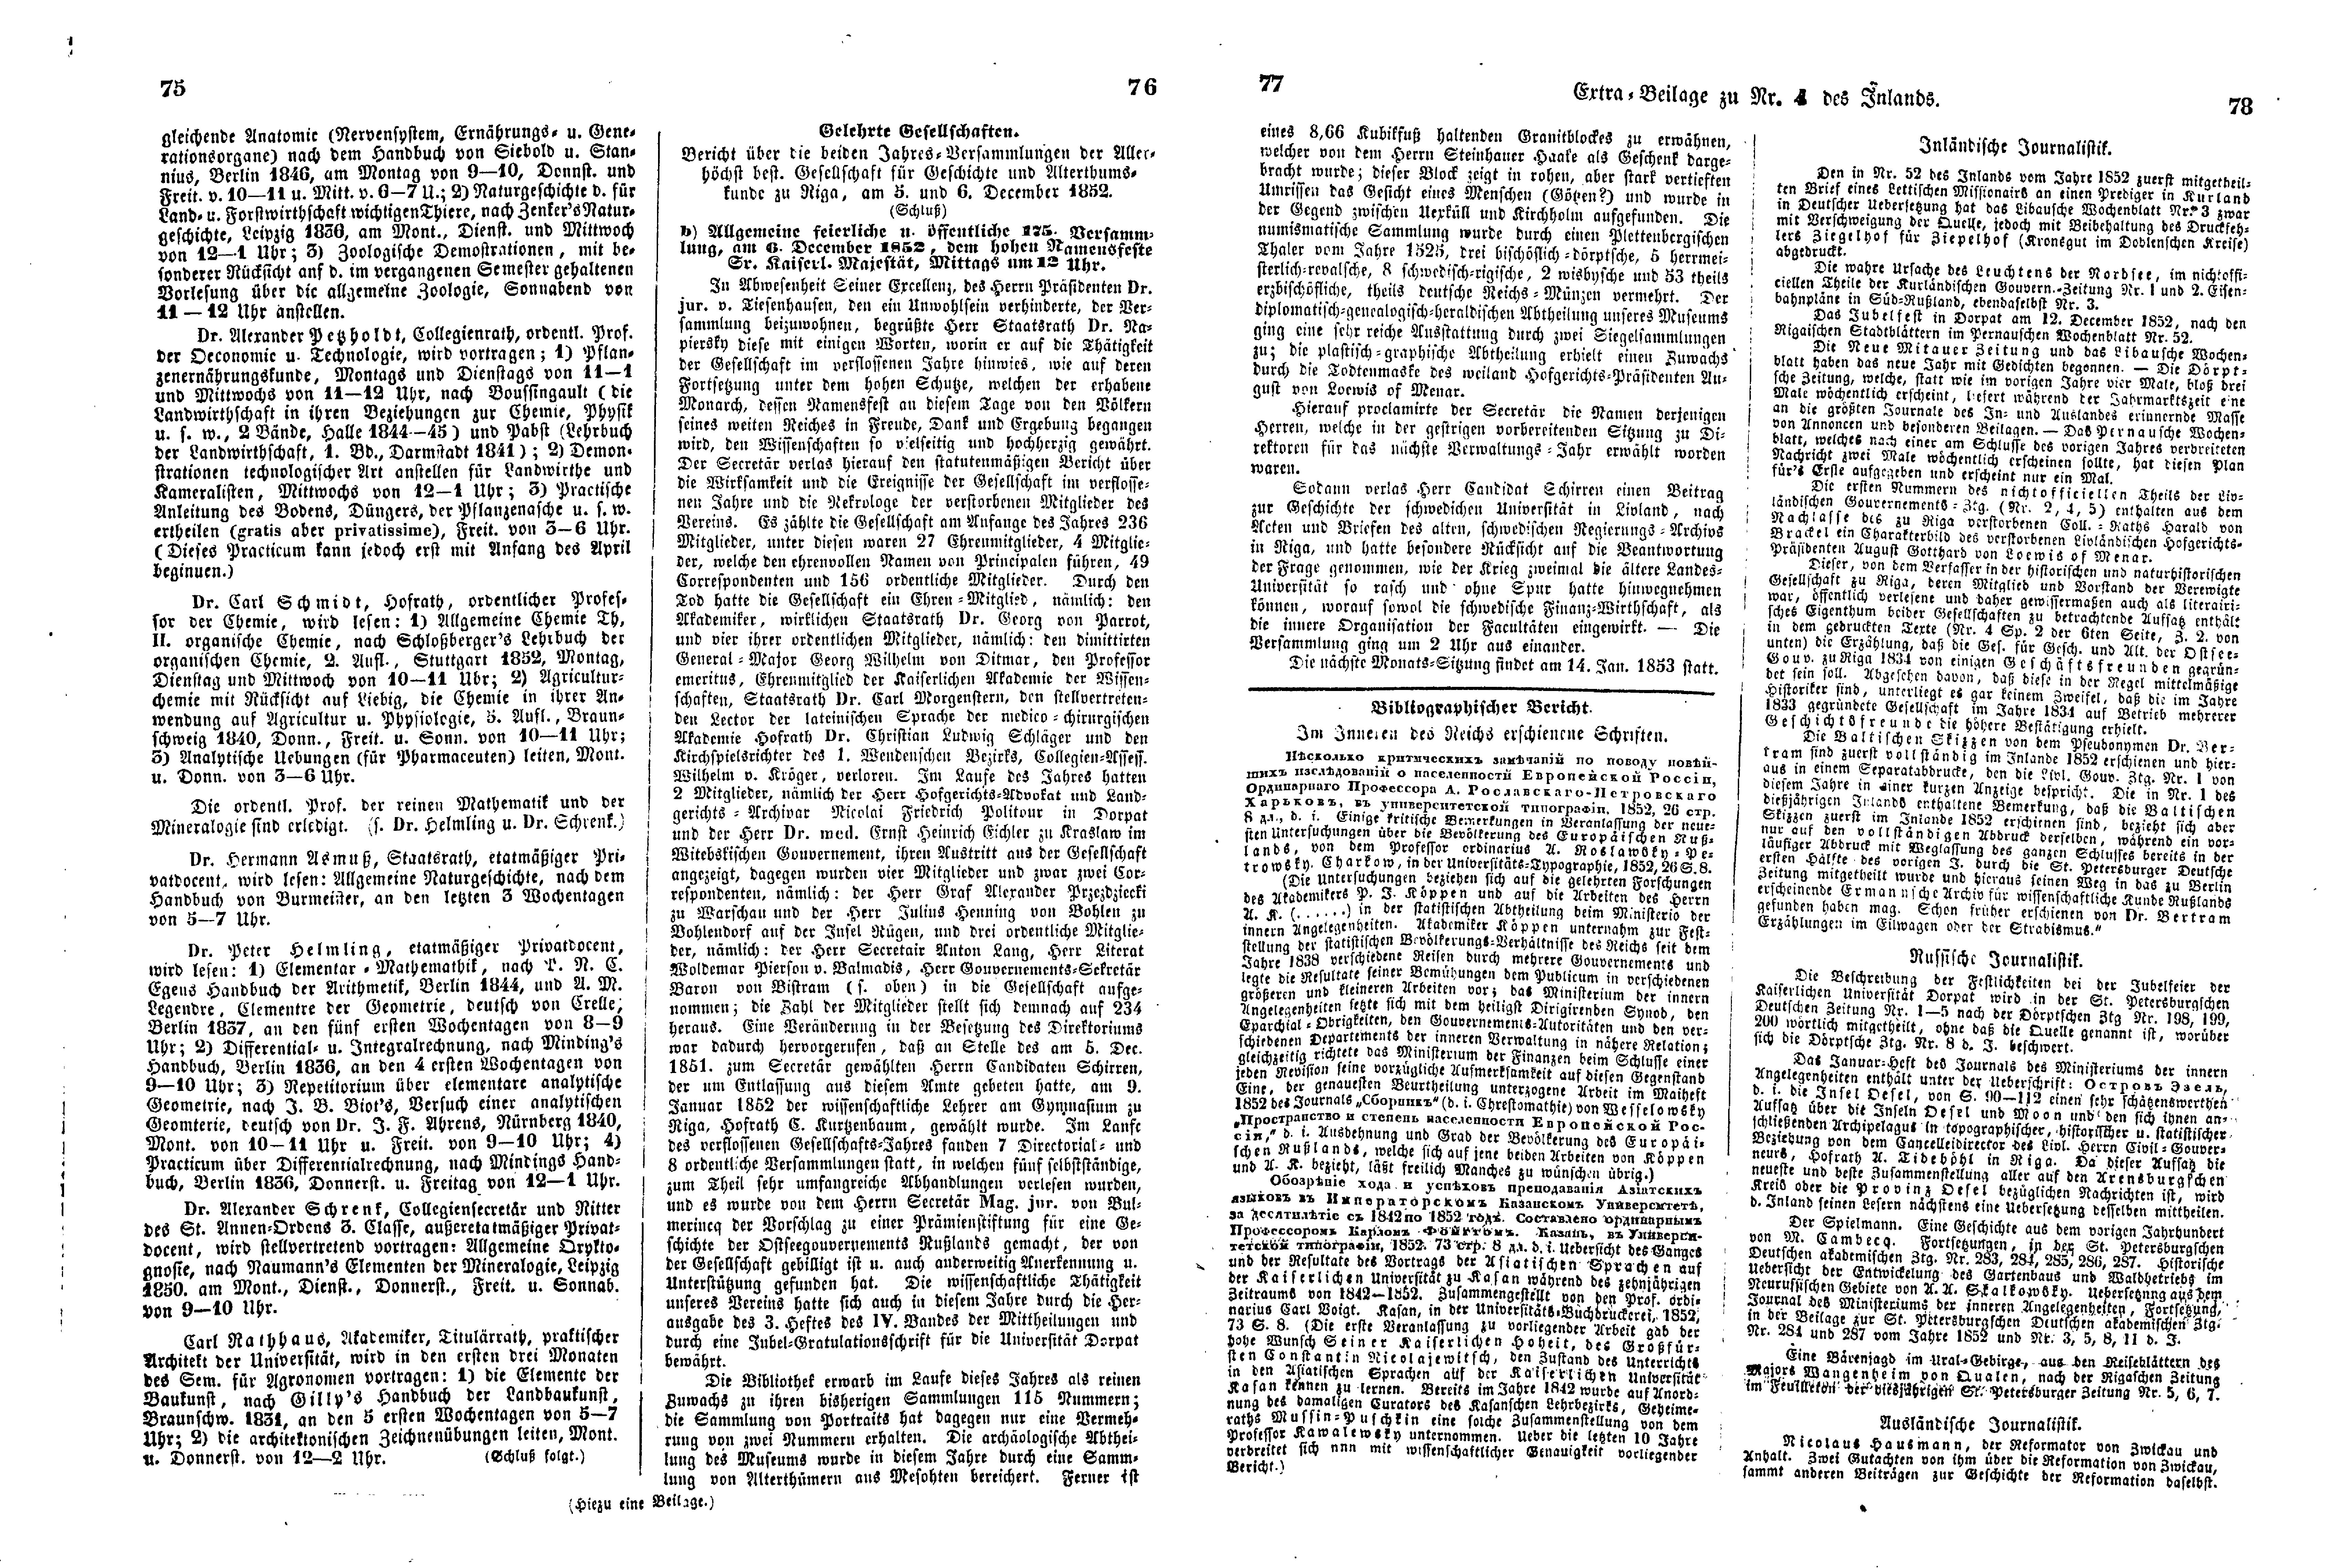 Das Inland [18] (1853) | 29. (75-78) Main body of text